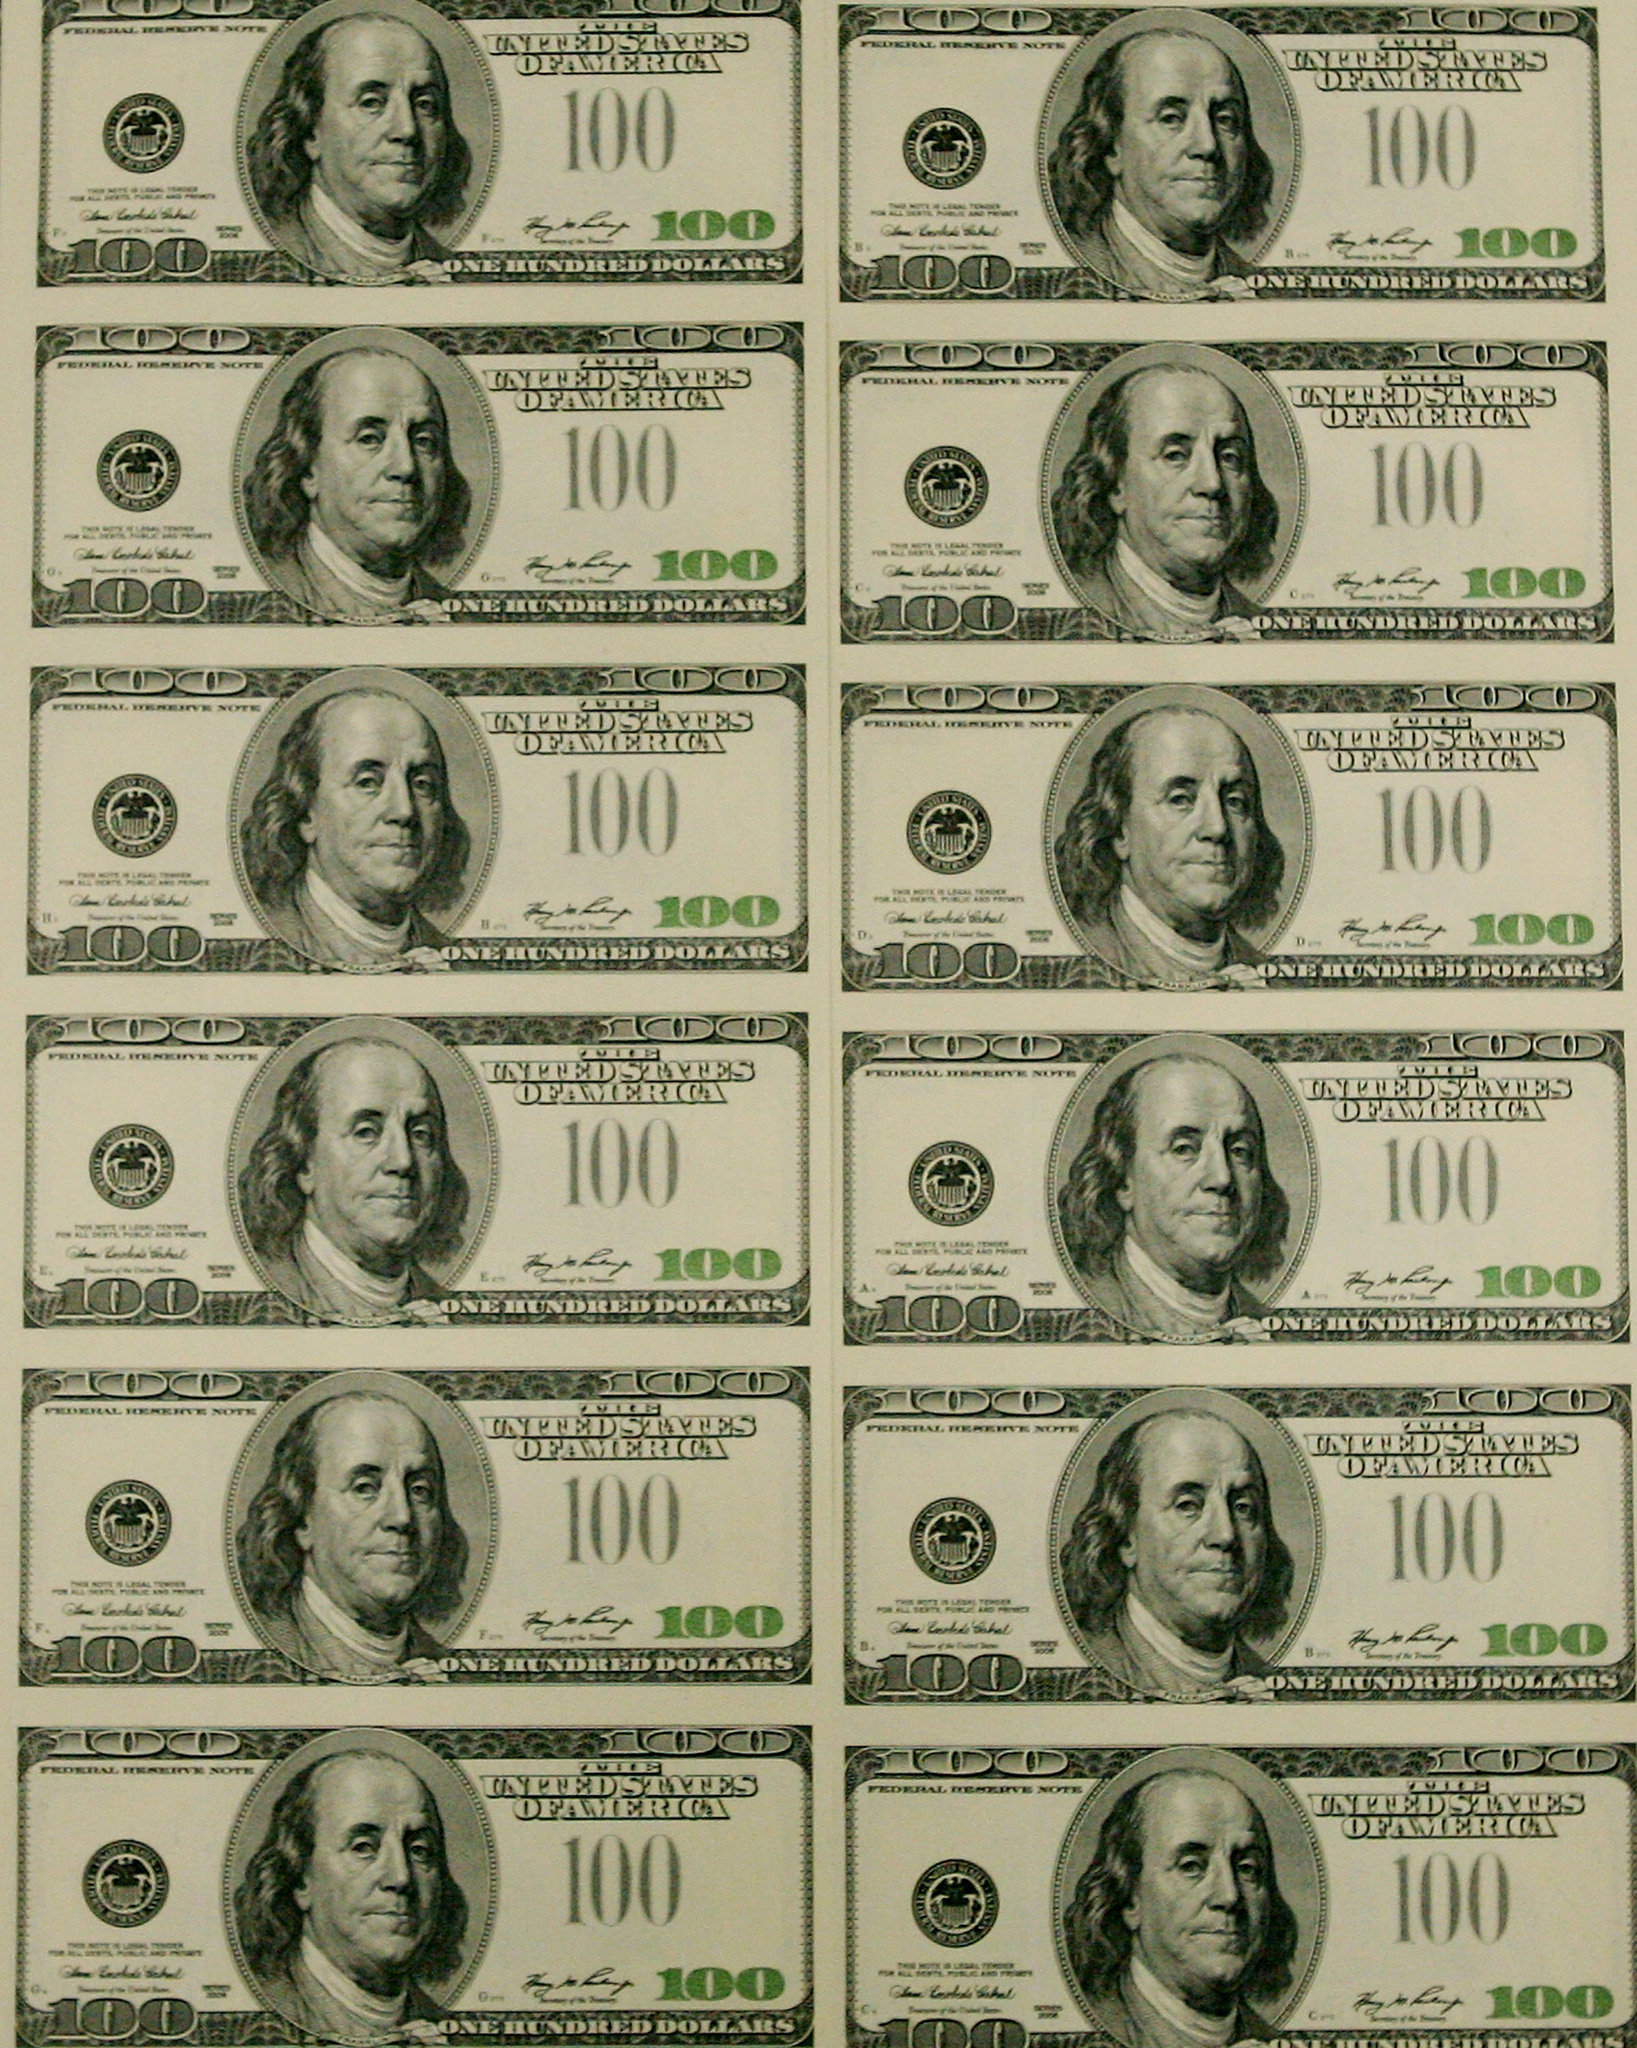 5 Best Images of Printable Fake Money Bills Julianne Hough, Printable